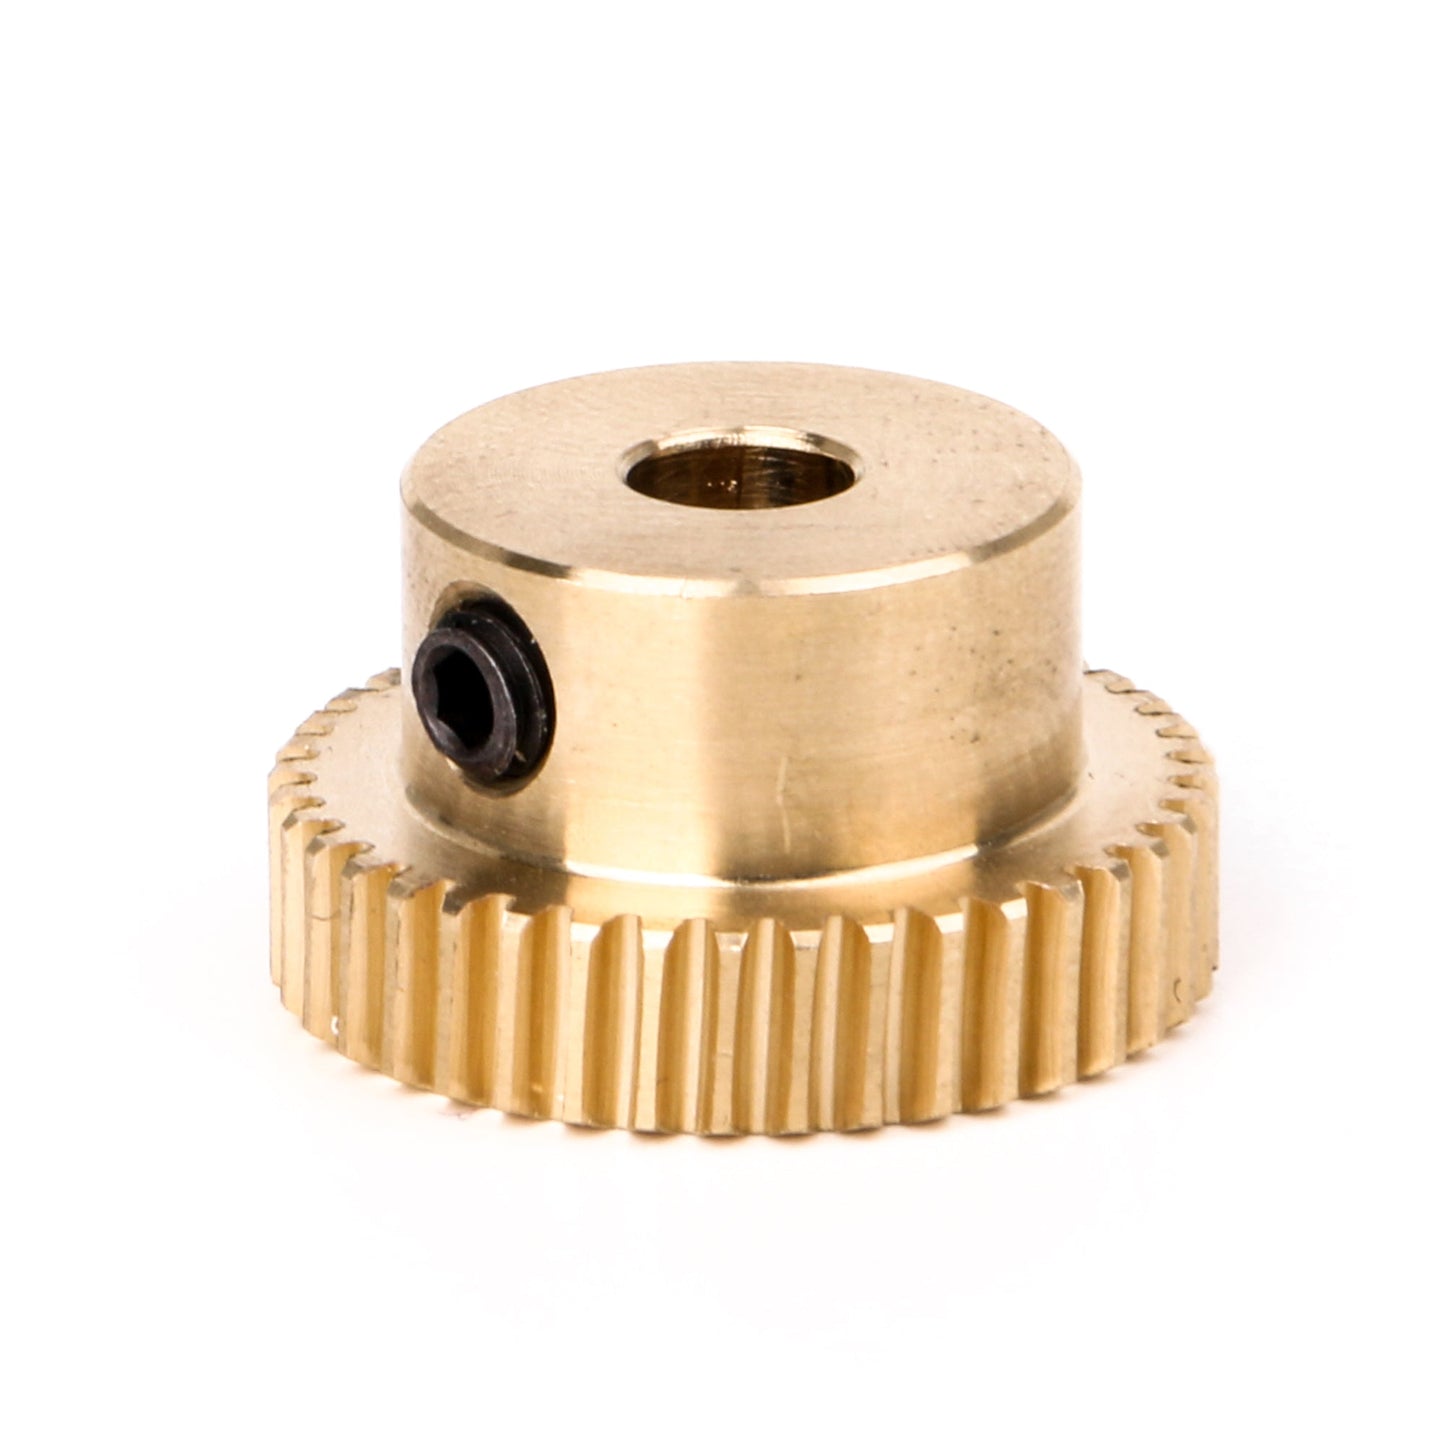 BQLZR Brass 6mm Hole Diameter Brass Turbine Gear Shaft with 40T Gear Wheel 0.5 Modulus